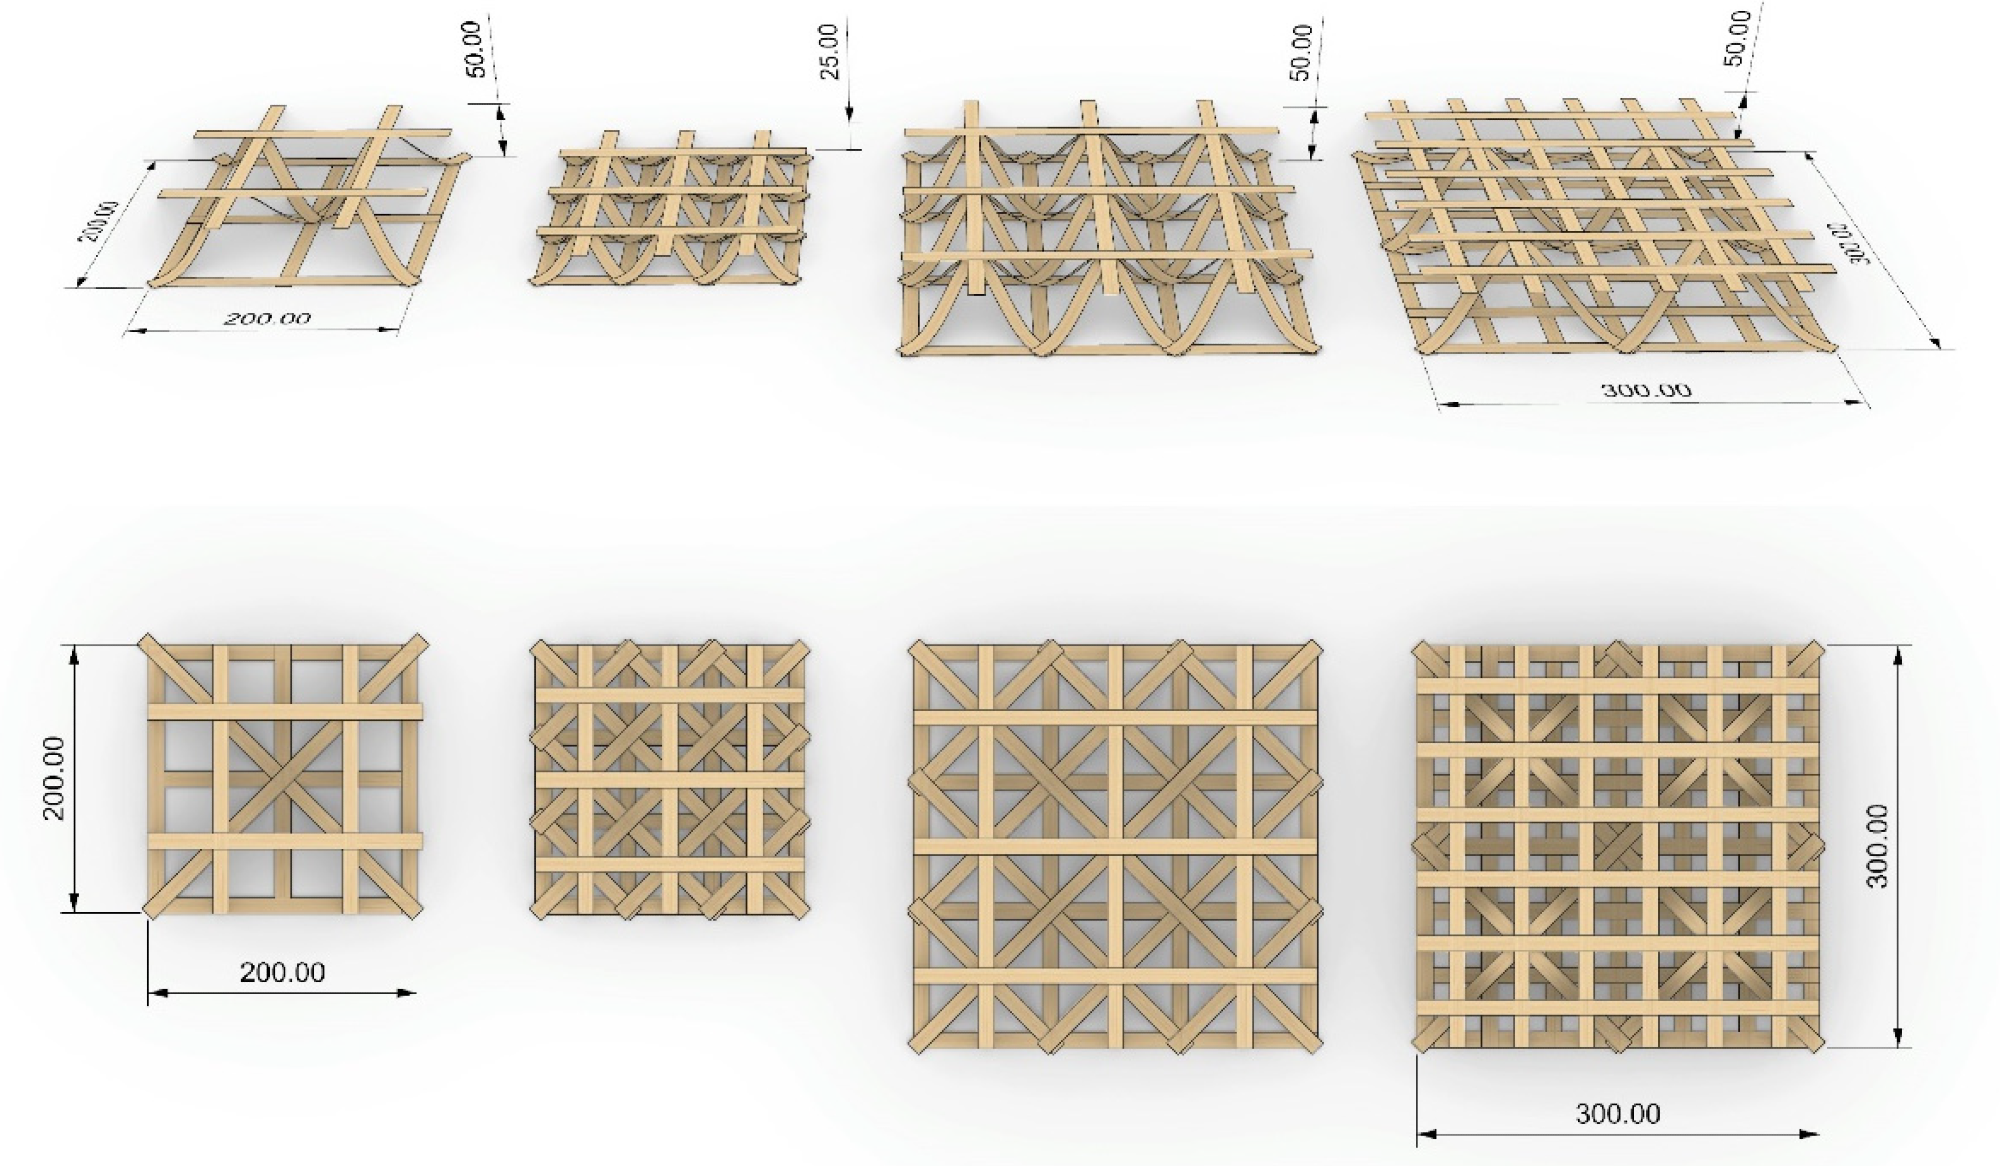 3D lattice layout studies (dimensions in mm).